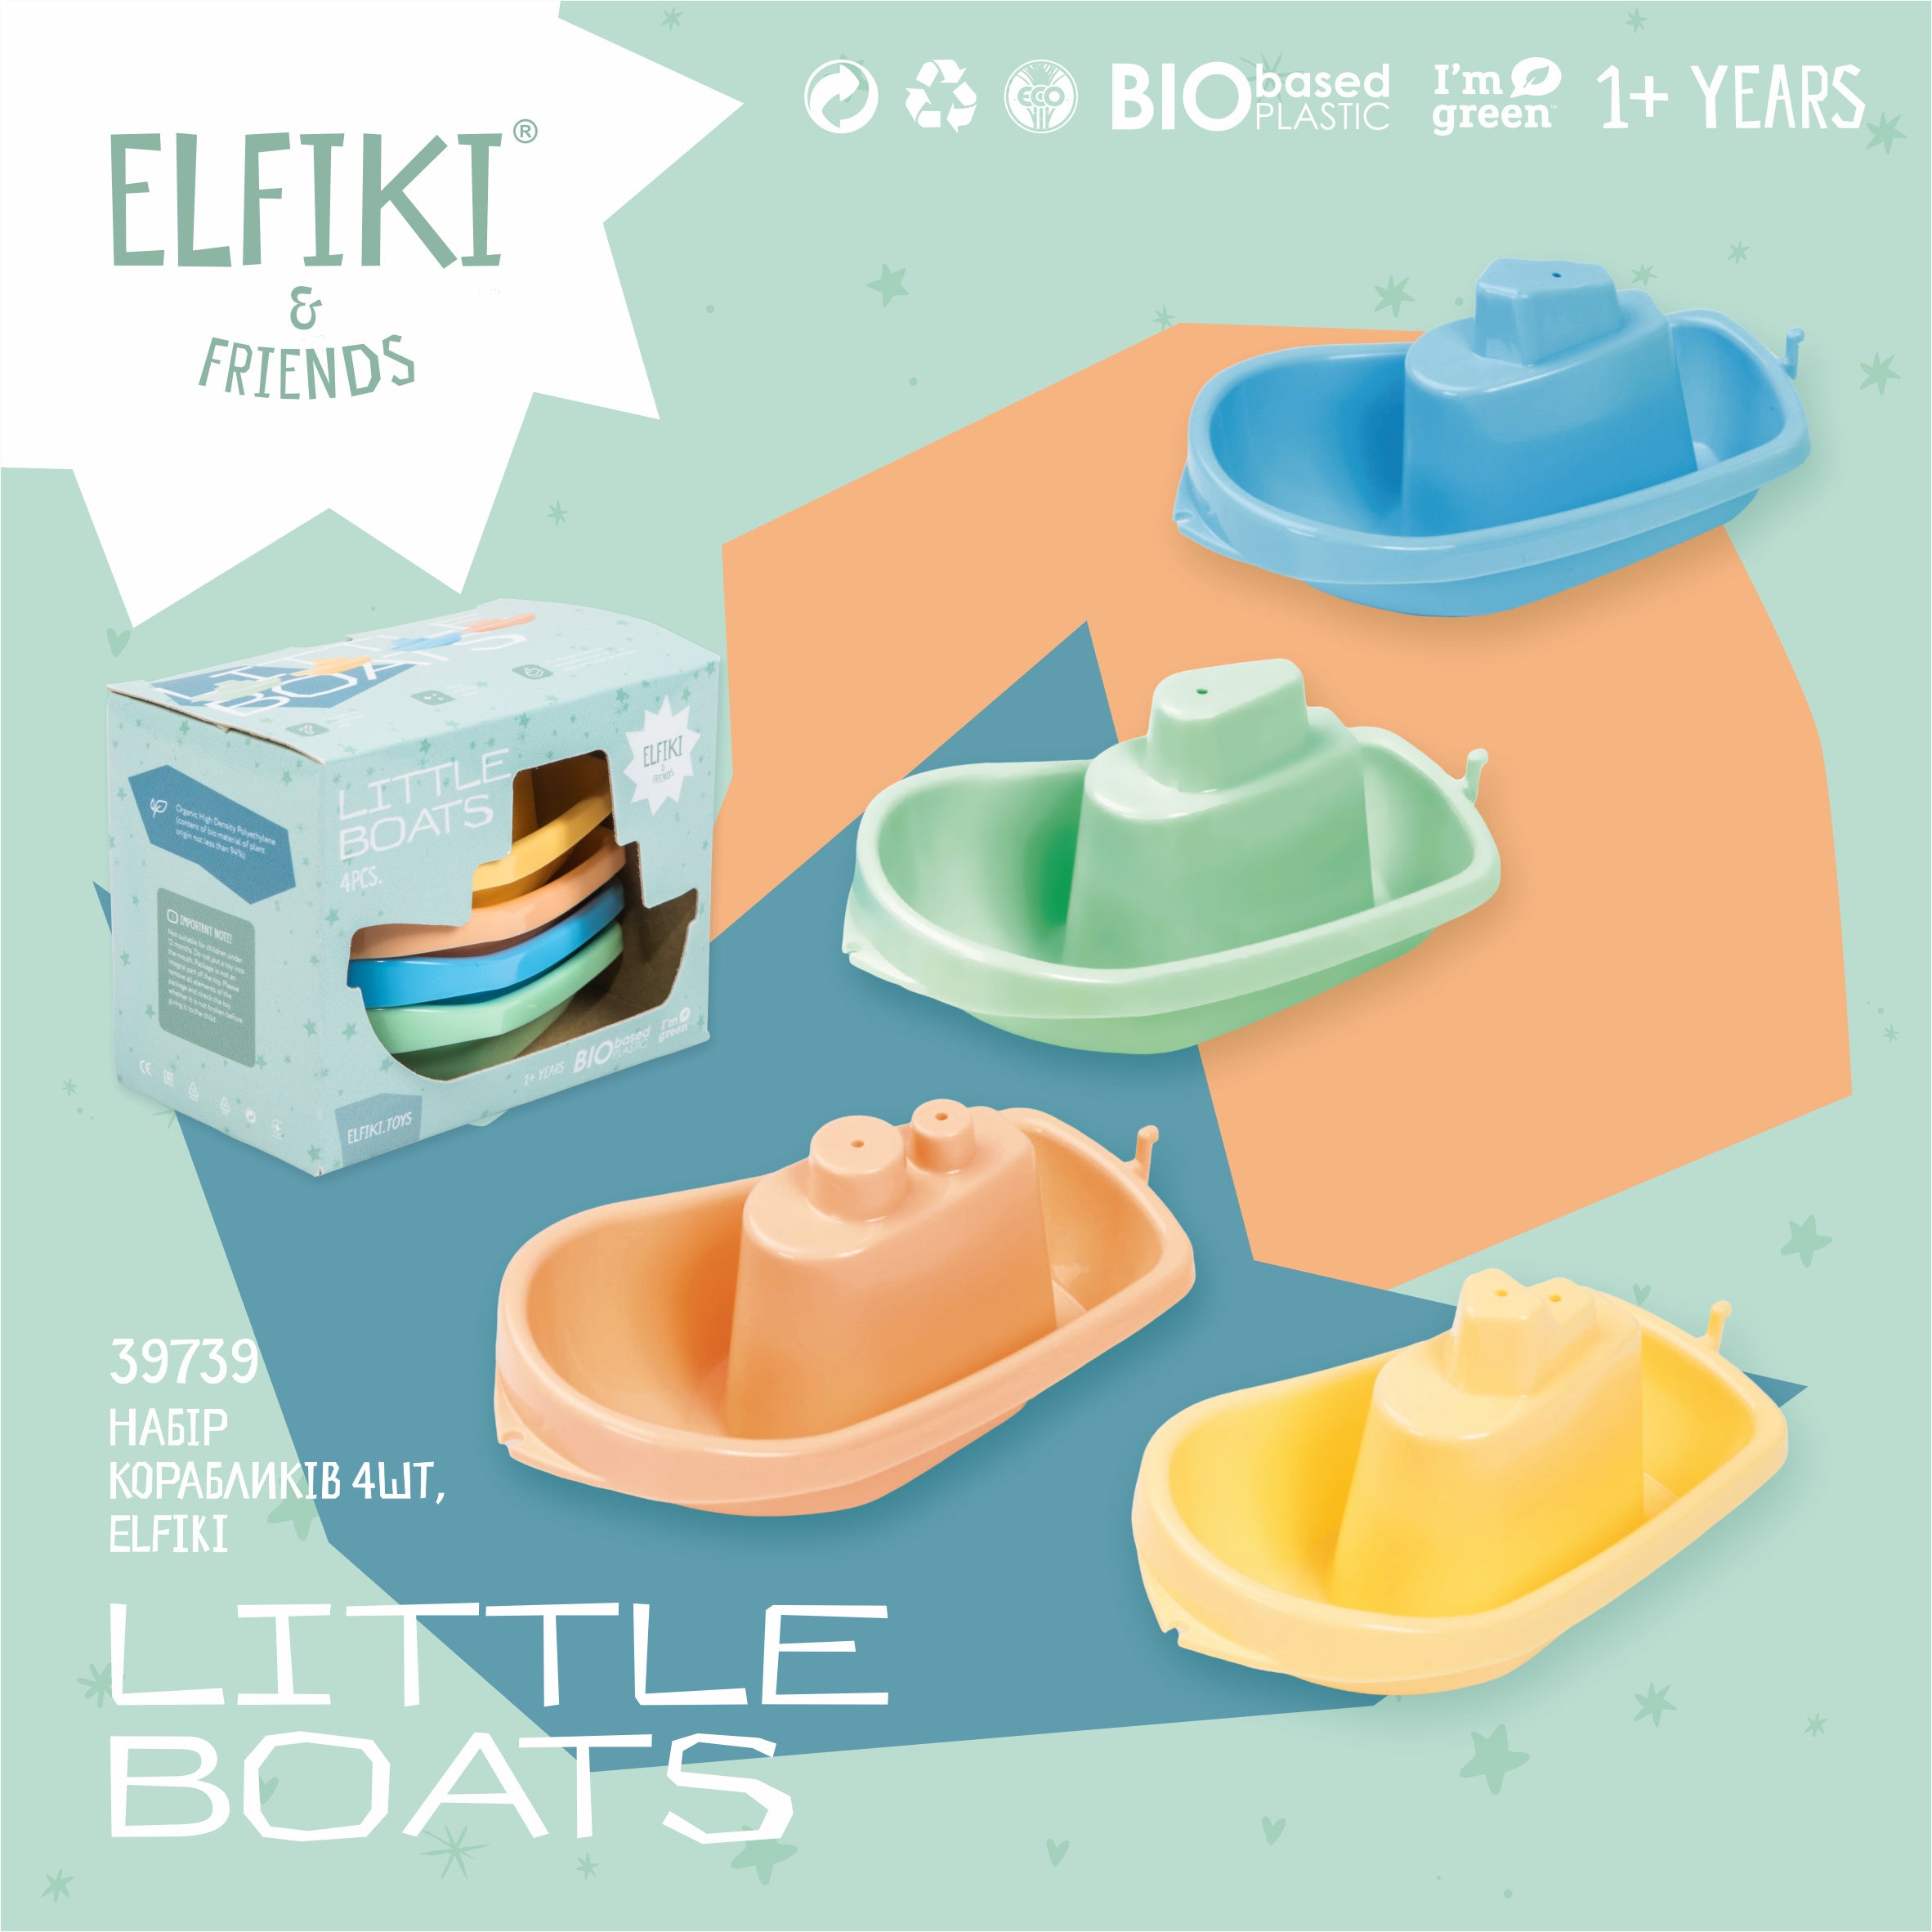 Bioplastic toys - 4 piece set of floating boats.